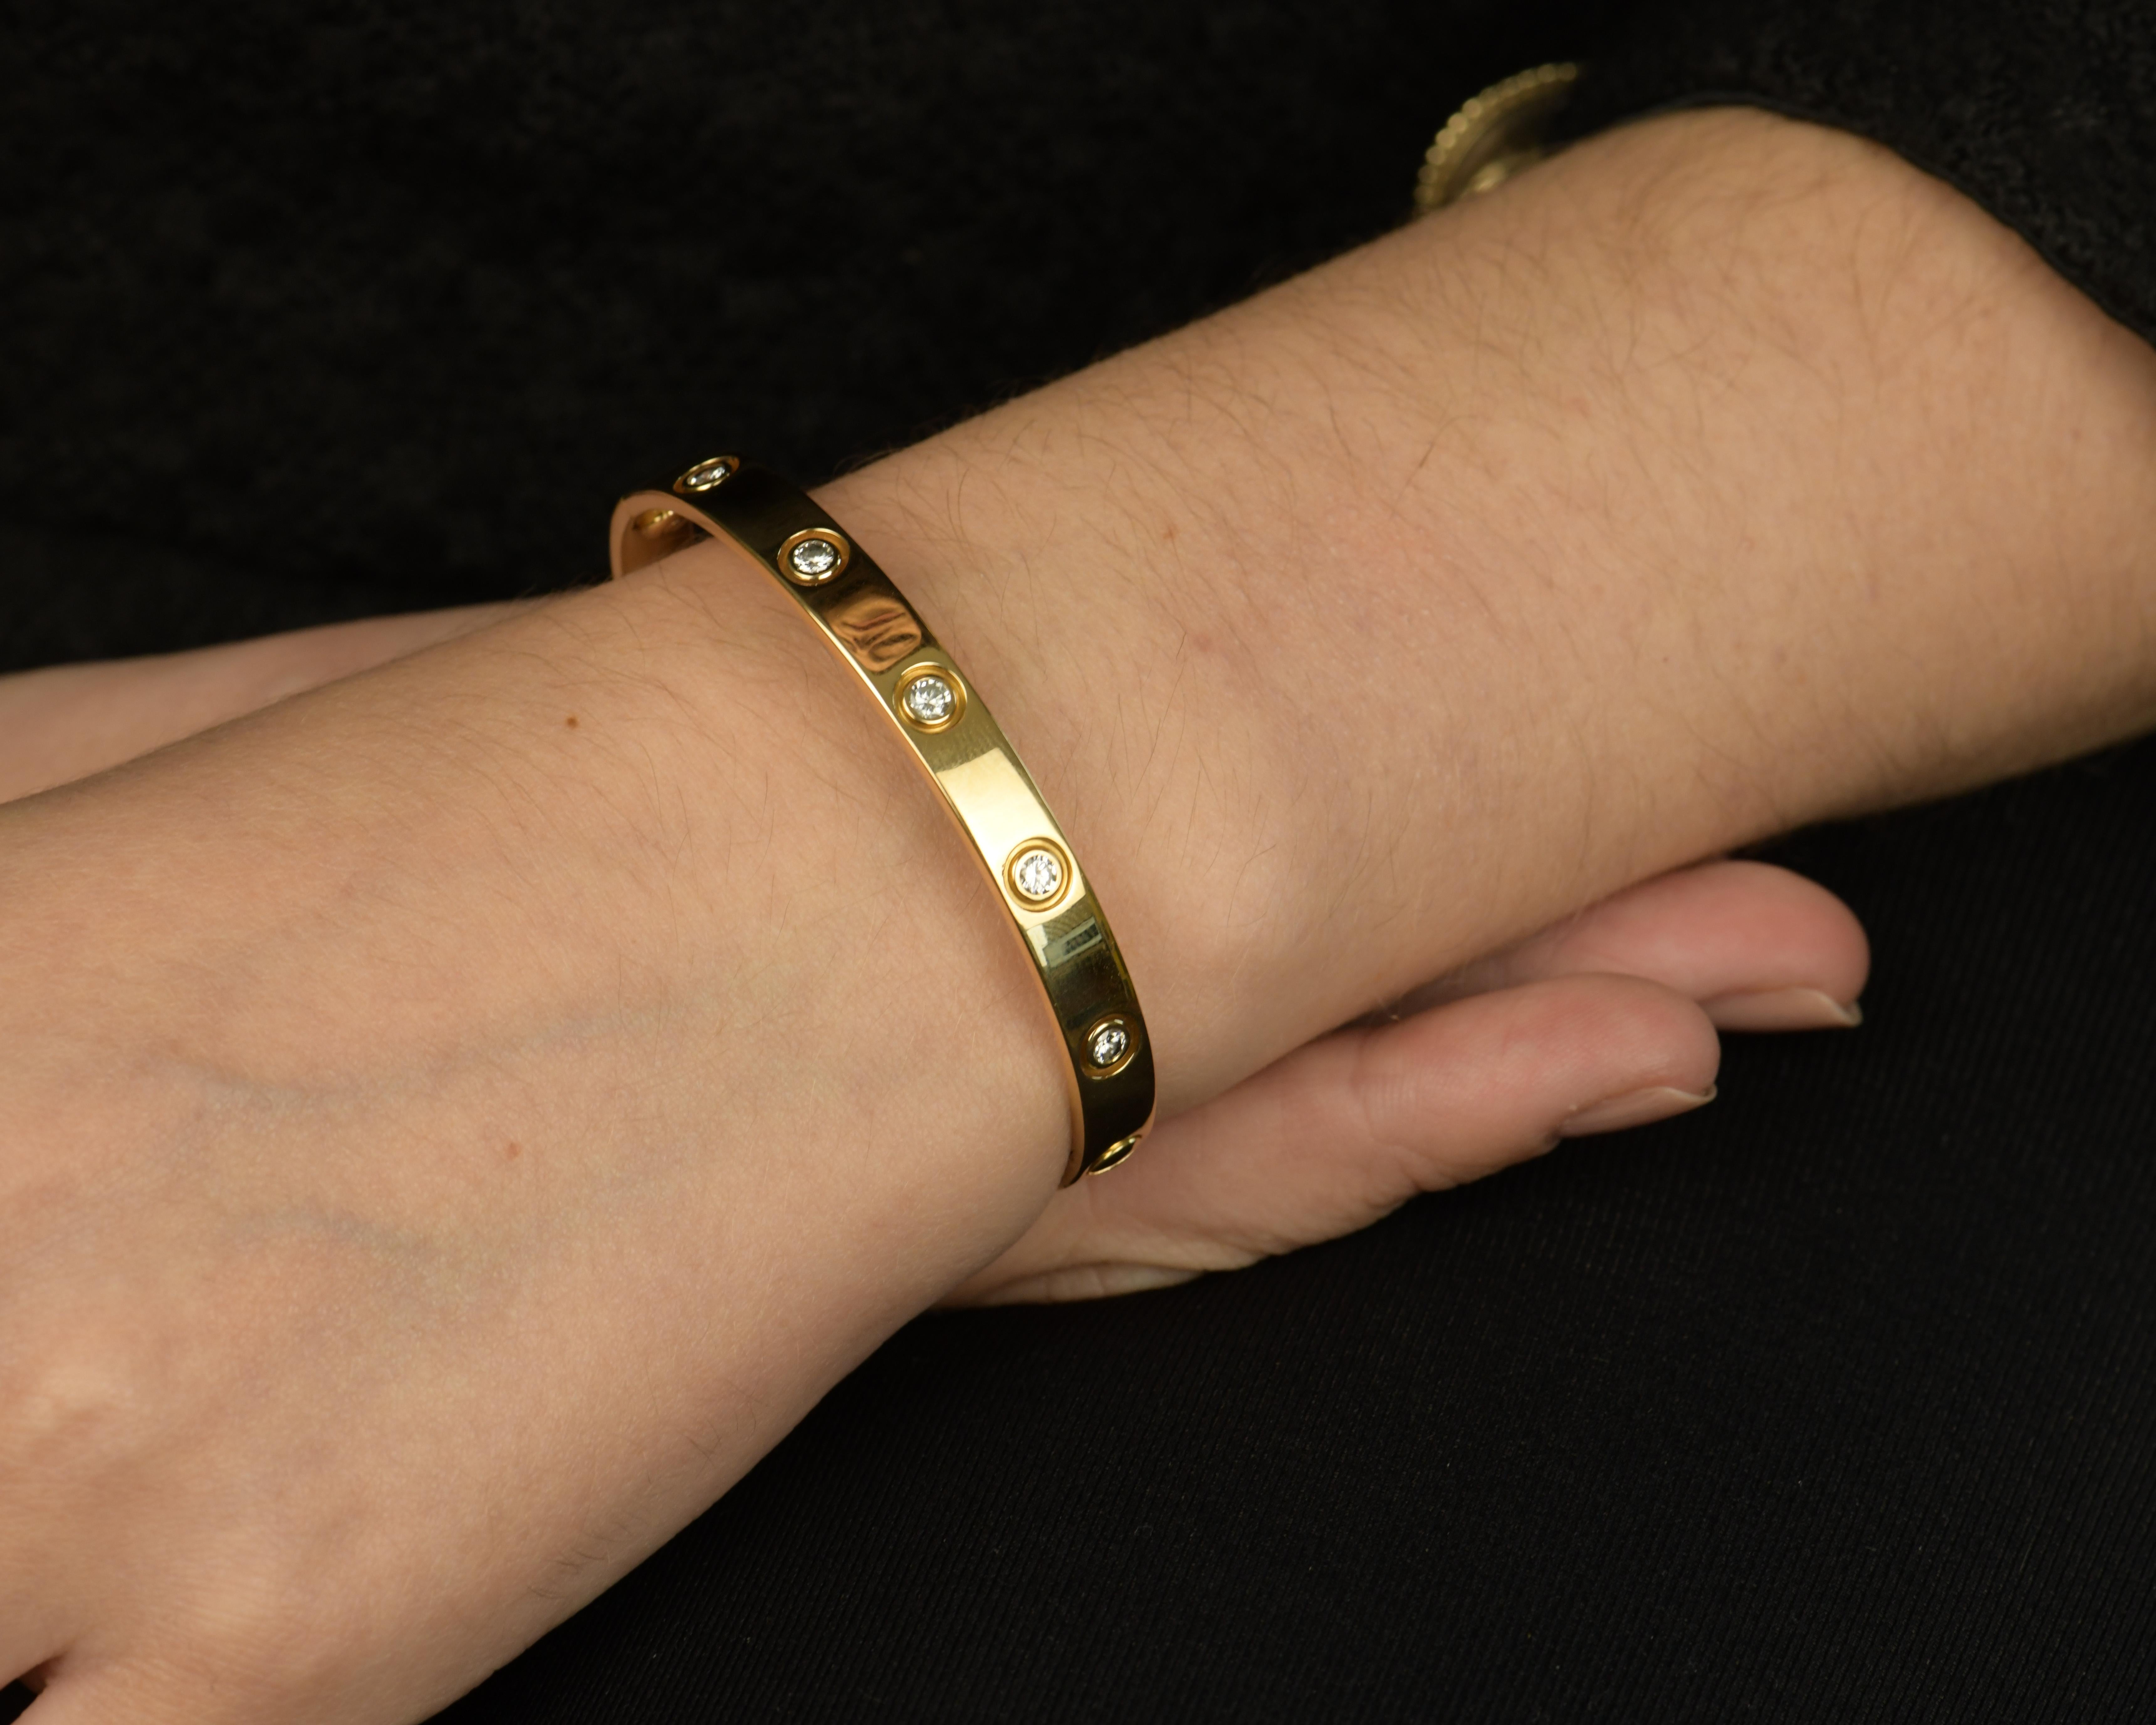 cartier gold love bracelet